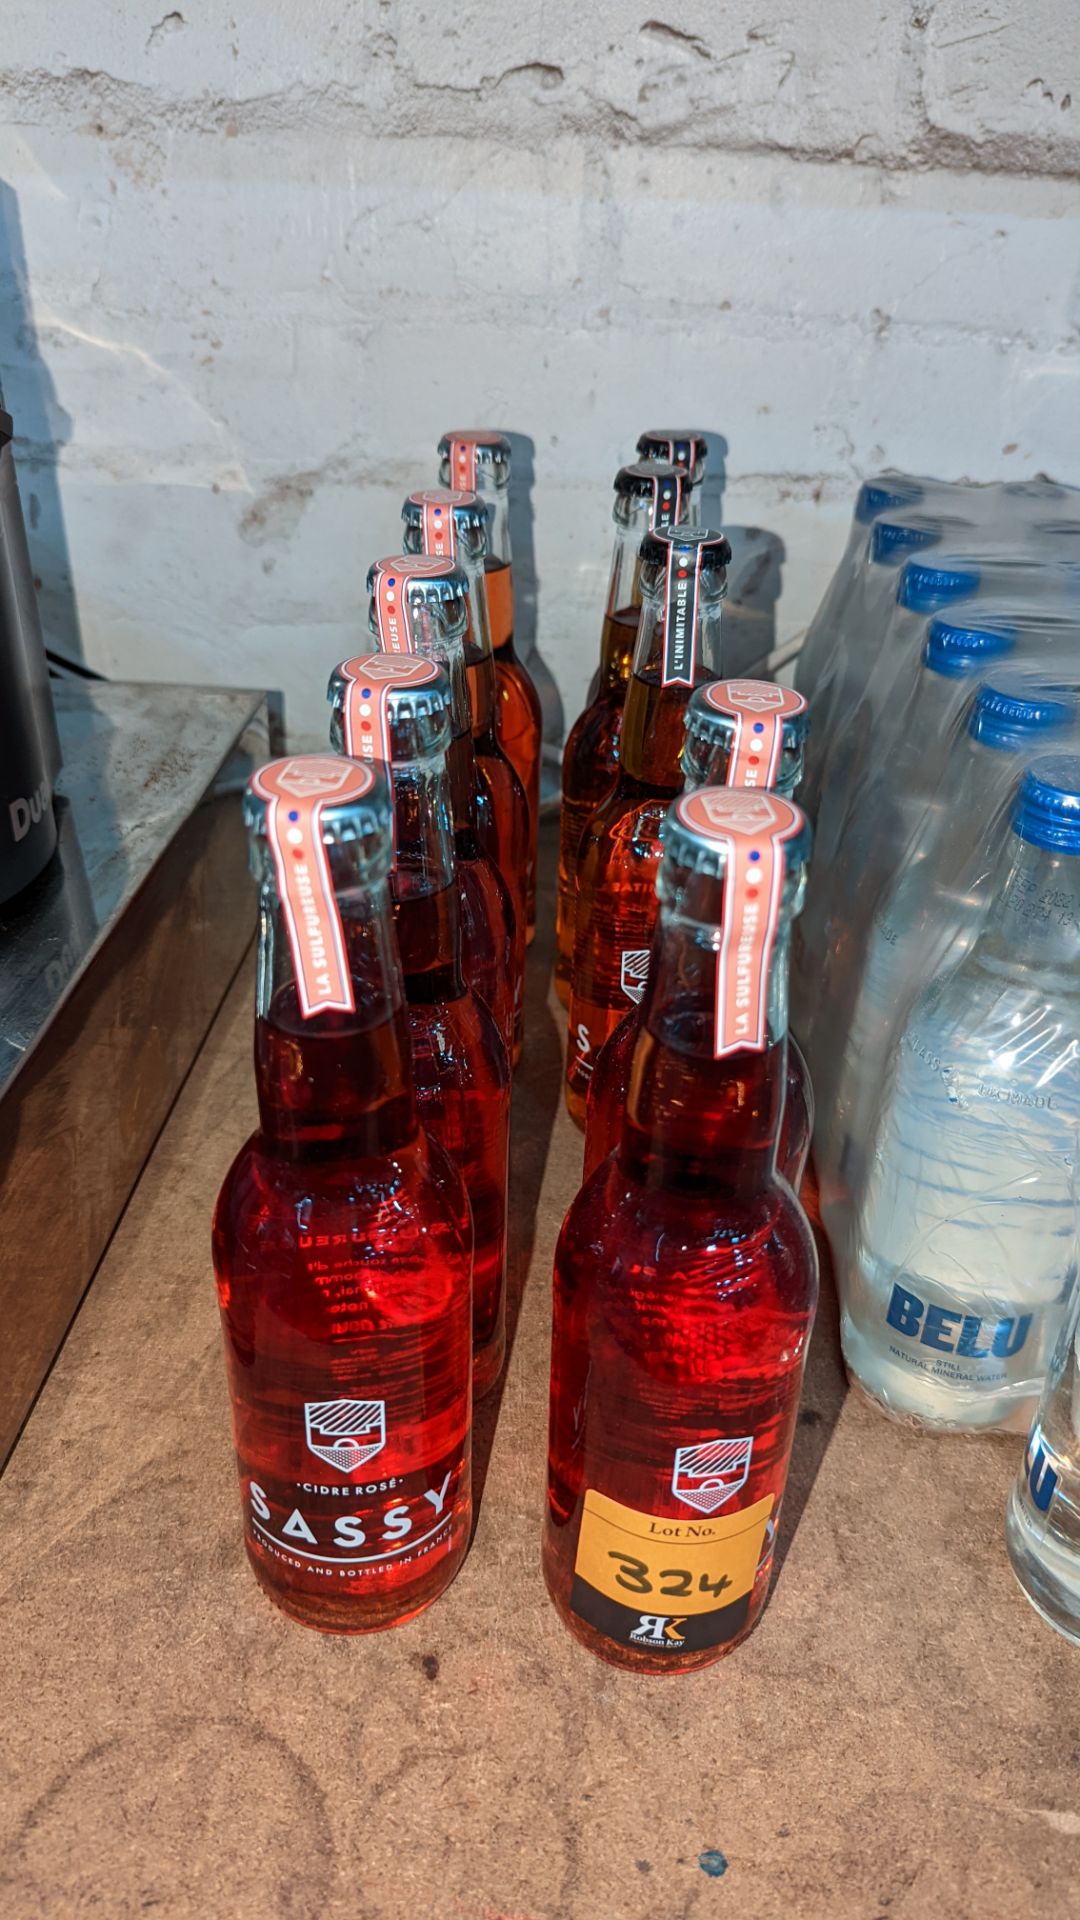 10 off 330ml bottles of Sassy Cidre & Cidre Rosé sold under AWRS number XQAW00000101017